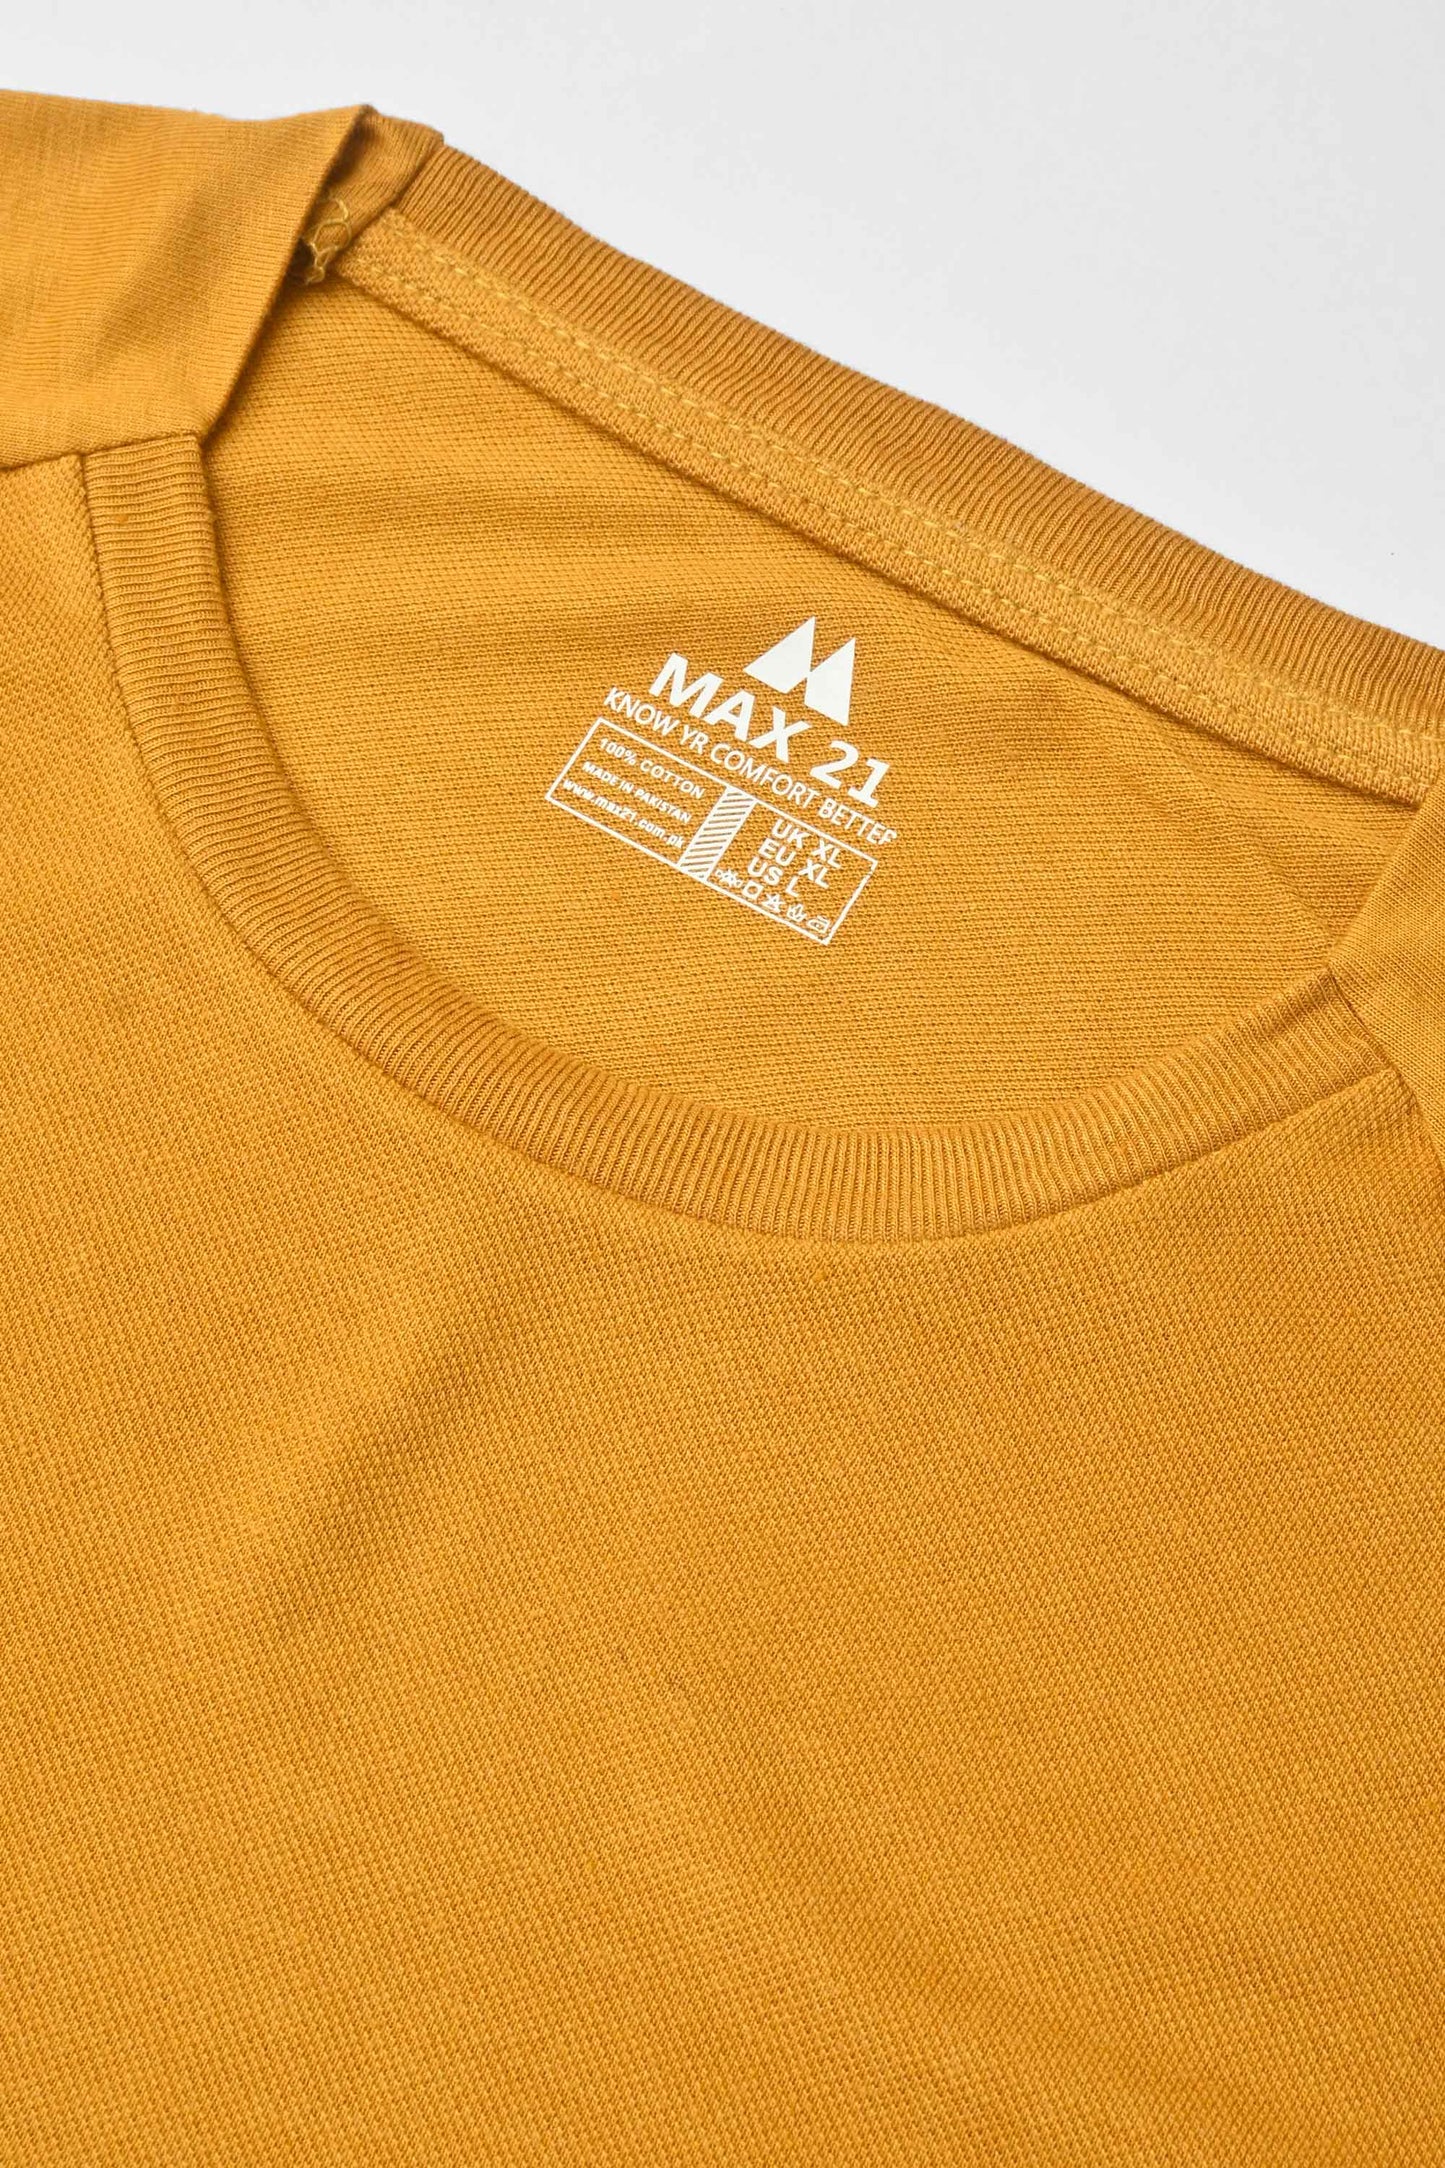 Max 21 Men's Falcon Reflector Printed Tee Shirt Men's Tee Shirt SZK 